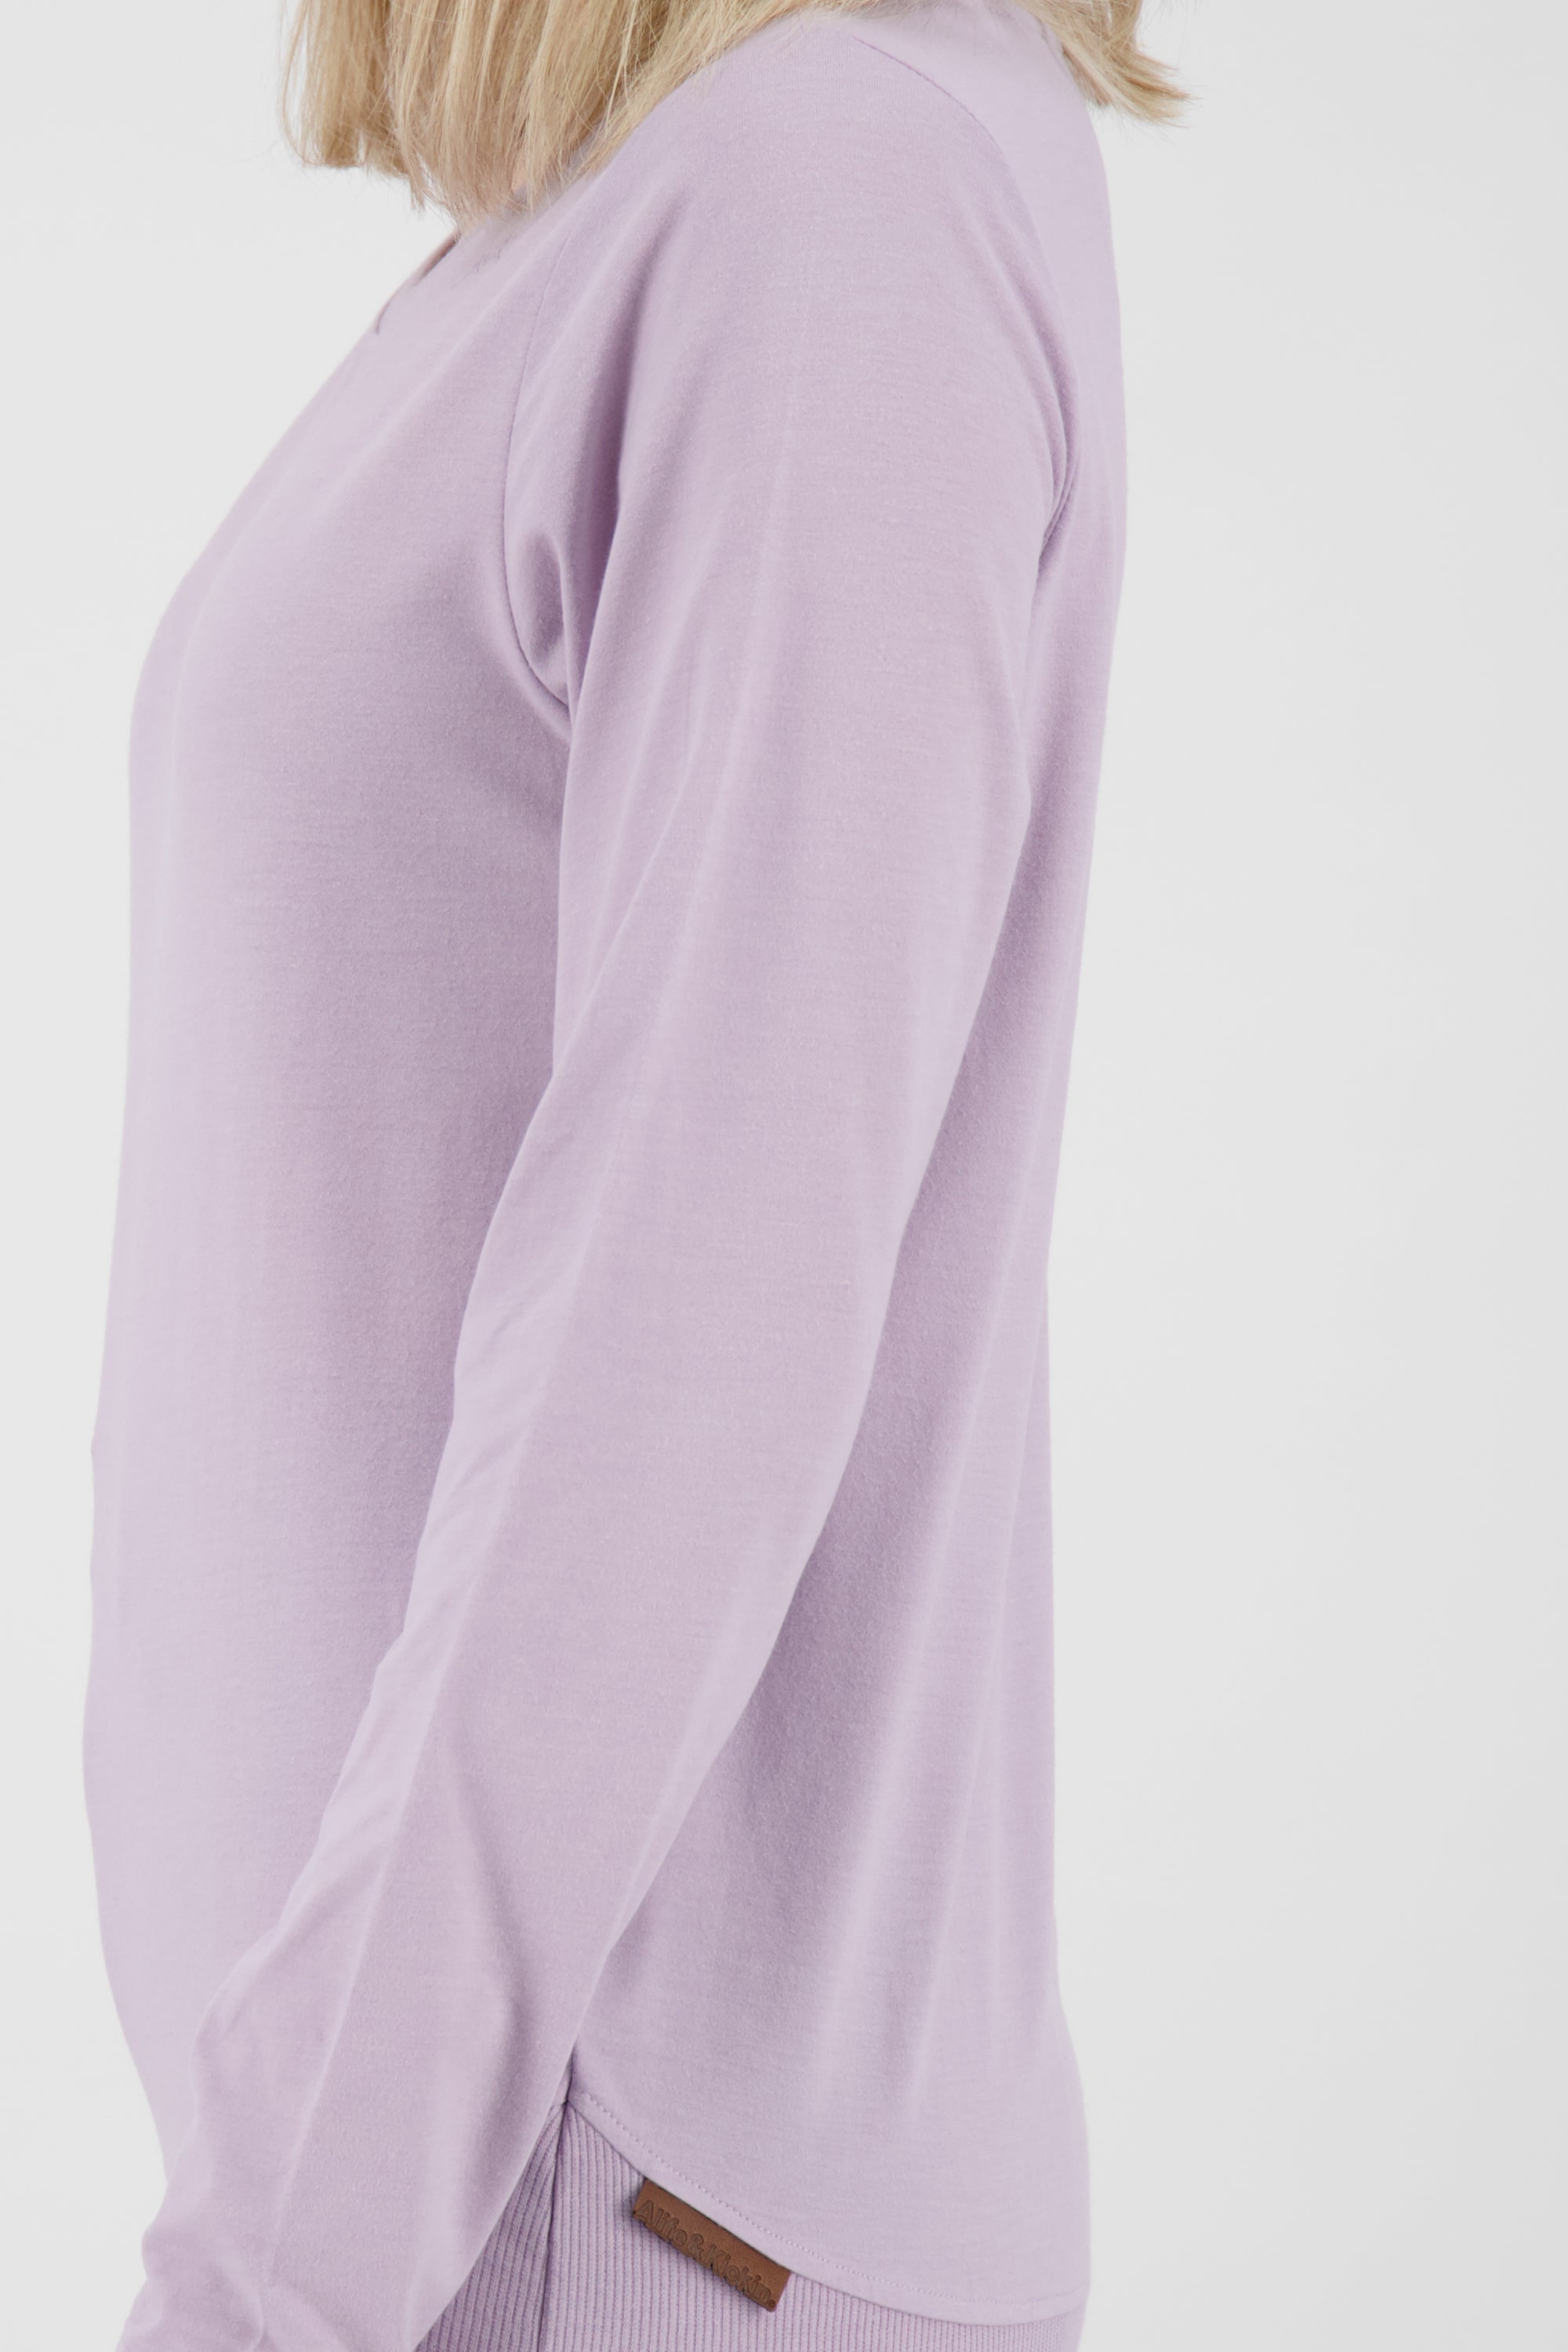 CoralieAK A Damen Langarmshirt in verschiedenen Farben Violett